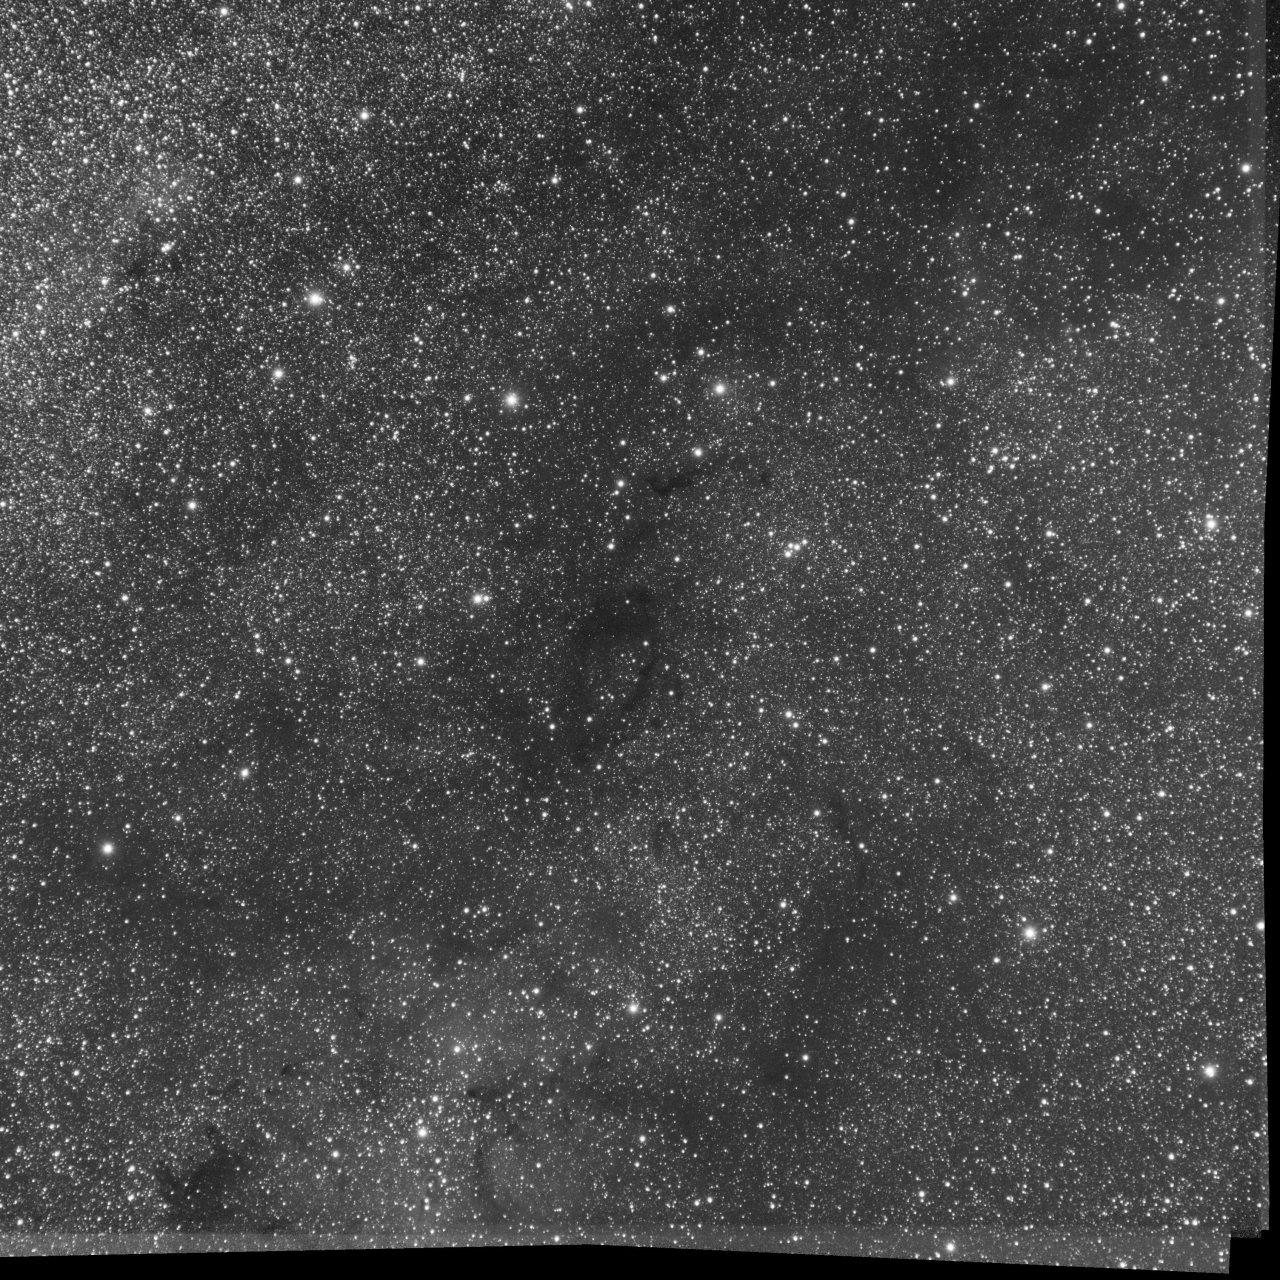 Cepheus on Barnard 170 - B